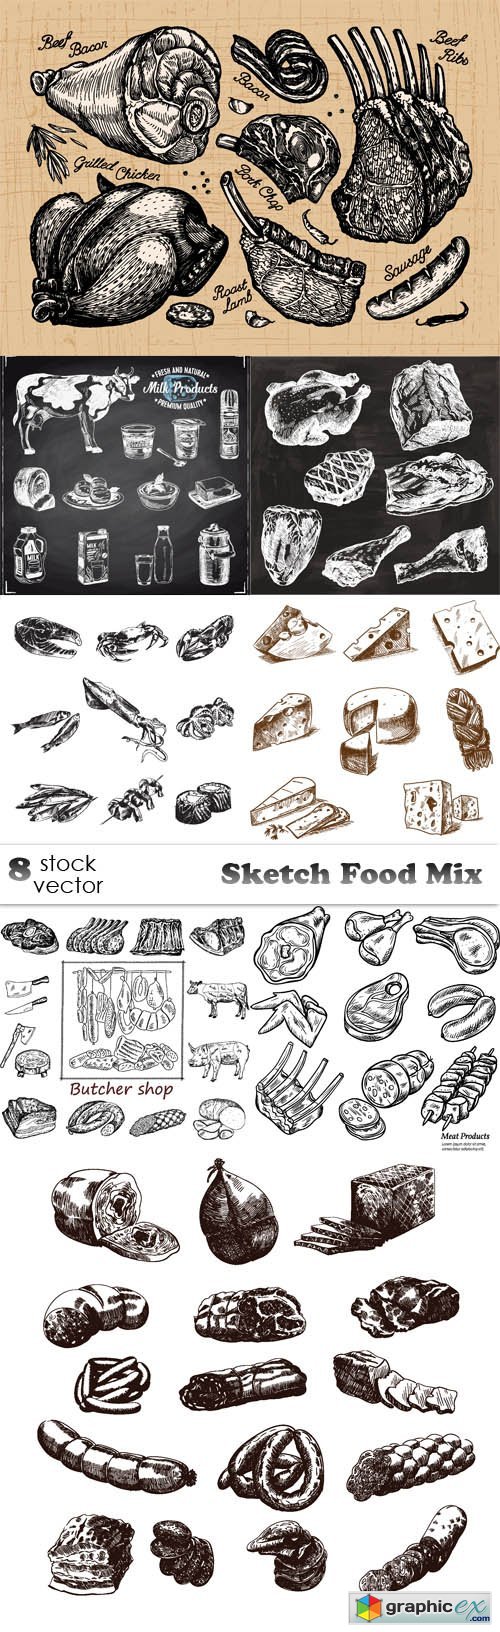 Sketch Food Mix